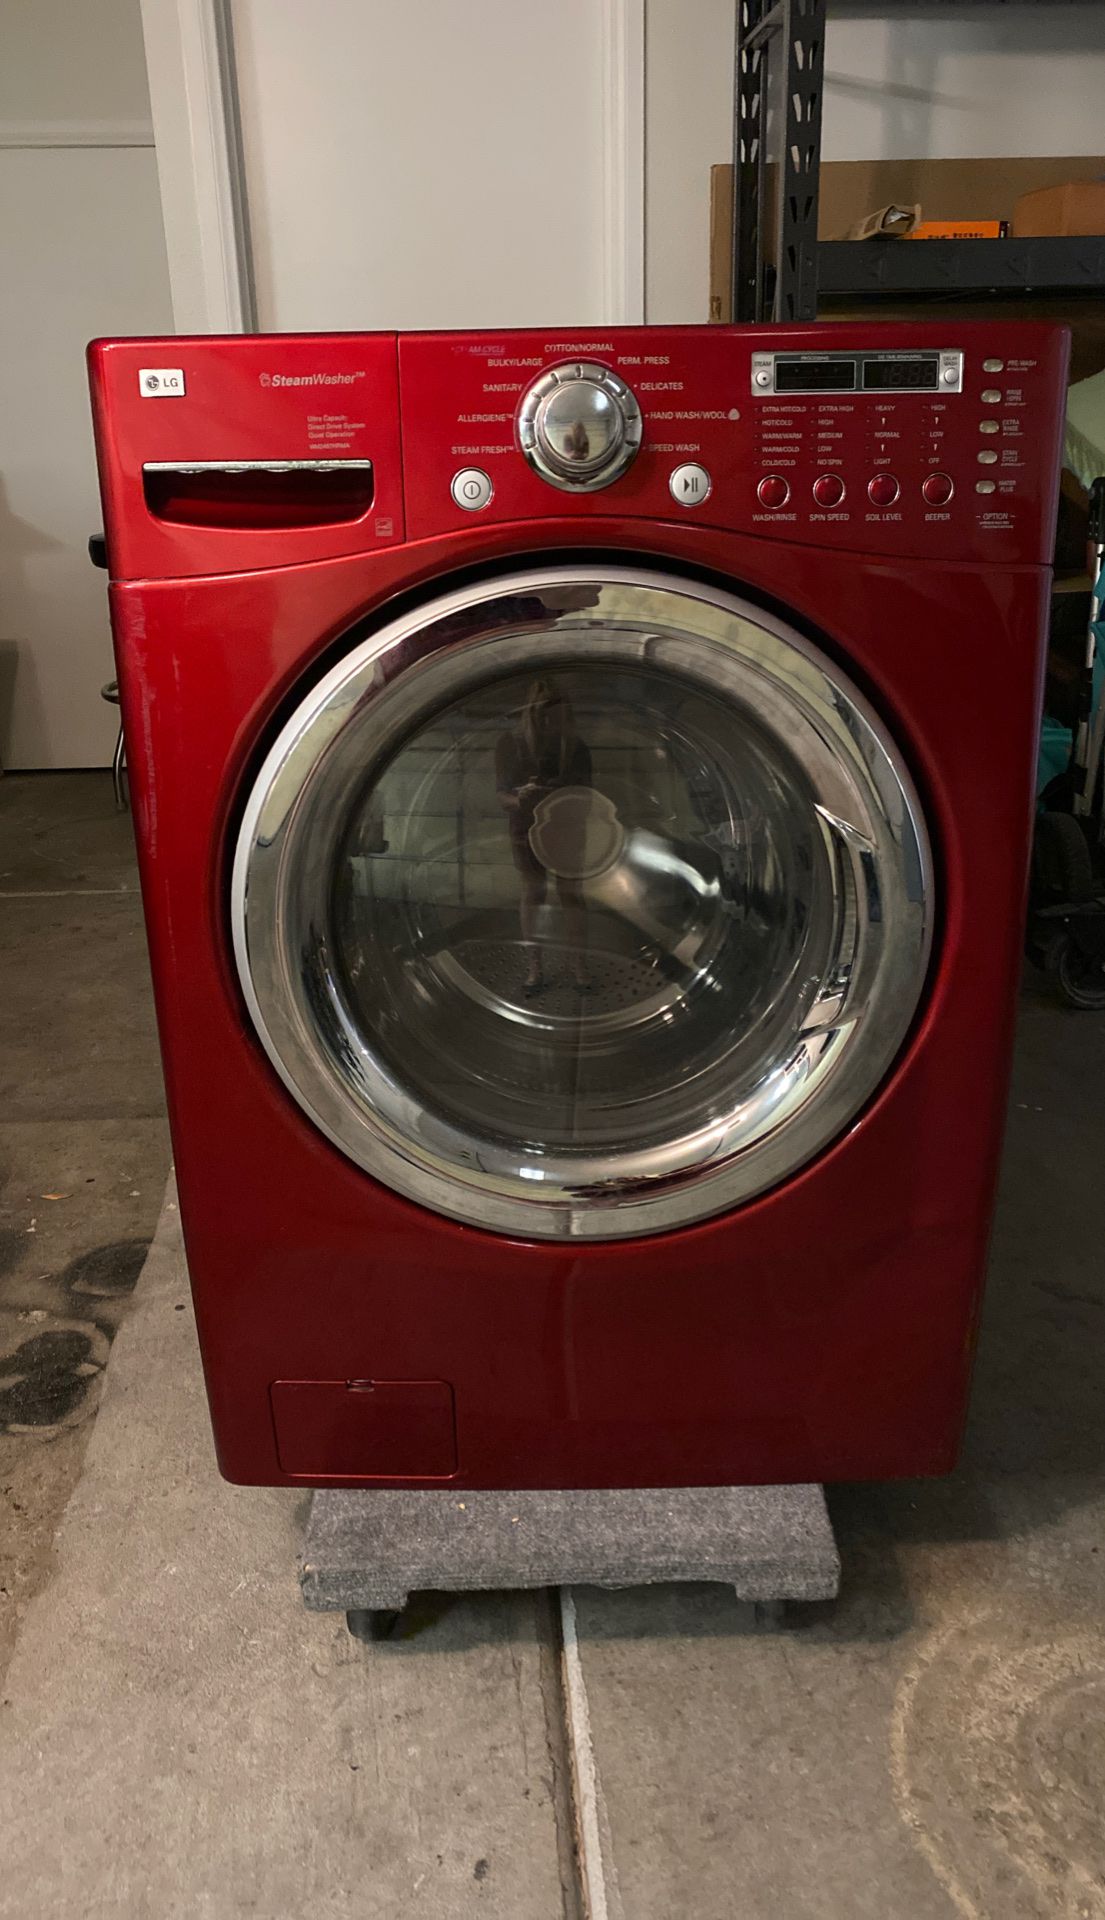 LG steam washer red front load washing machine